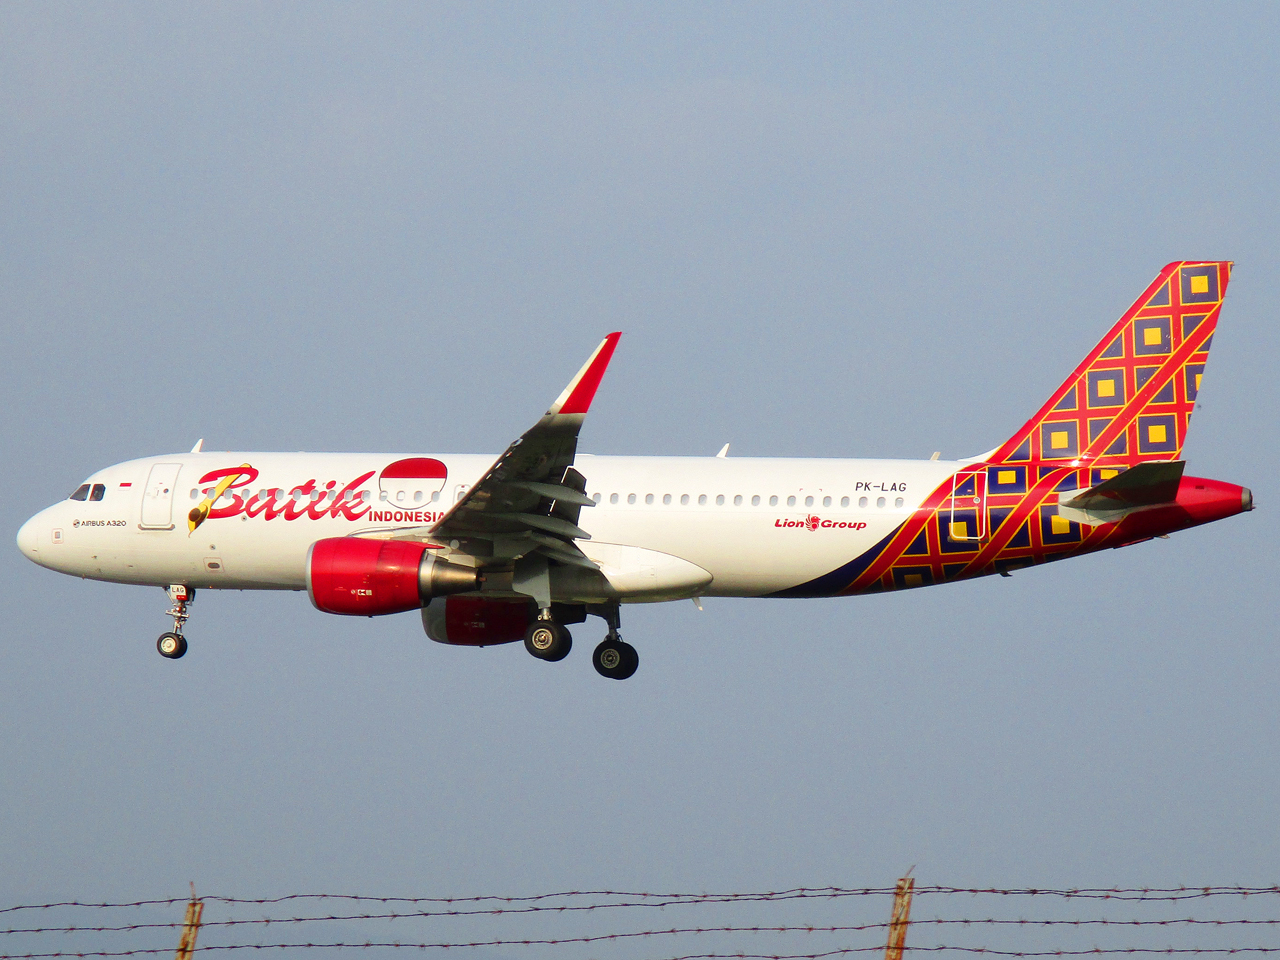 Pilots fell asleep during Batik Air flight, prompting probe by aviation authorities